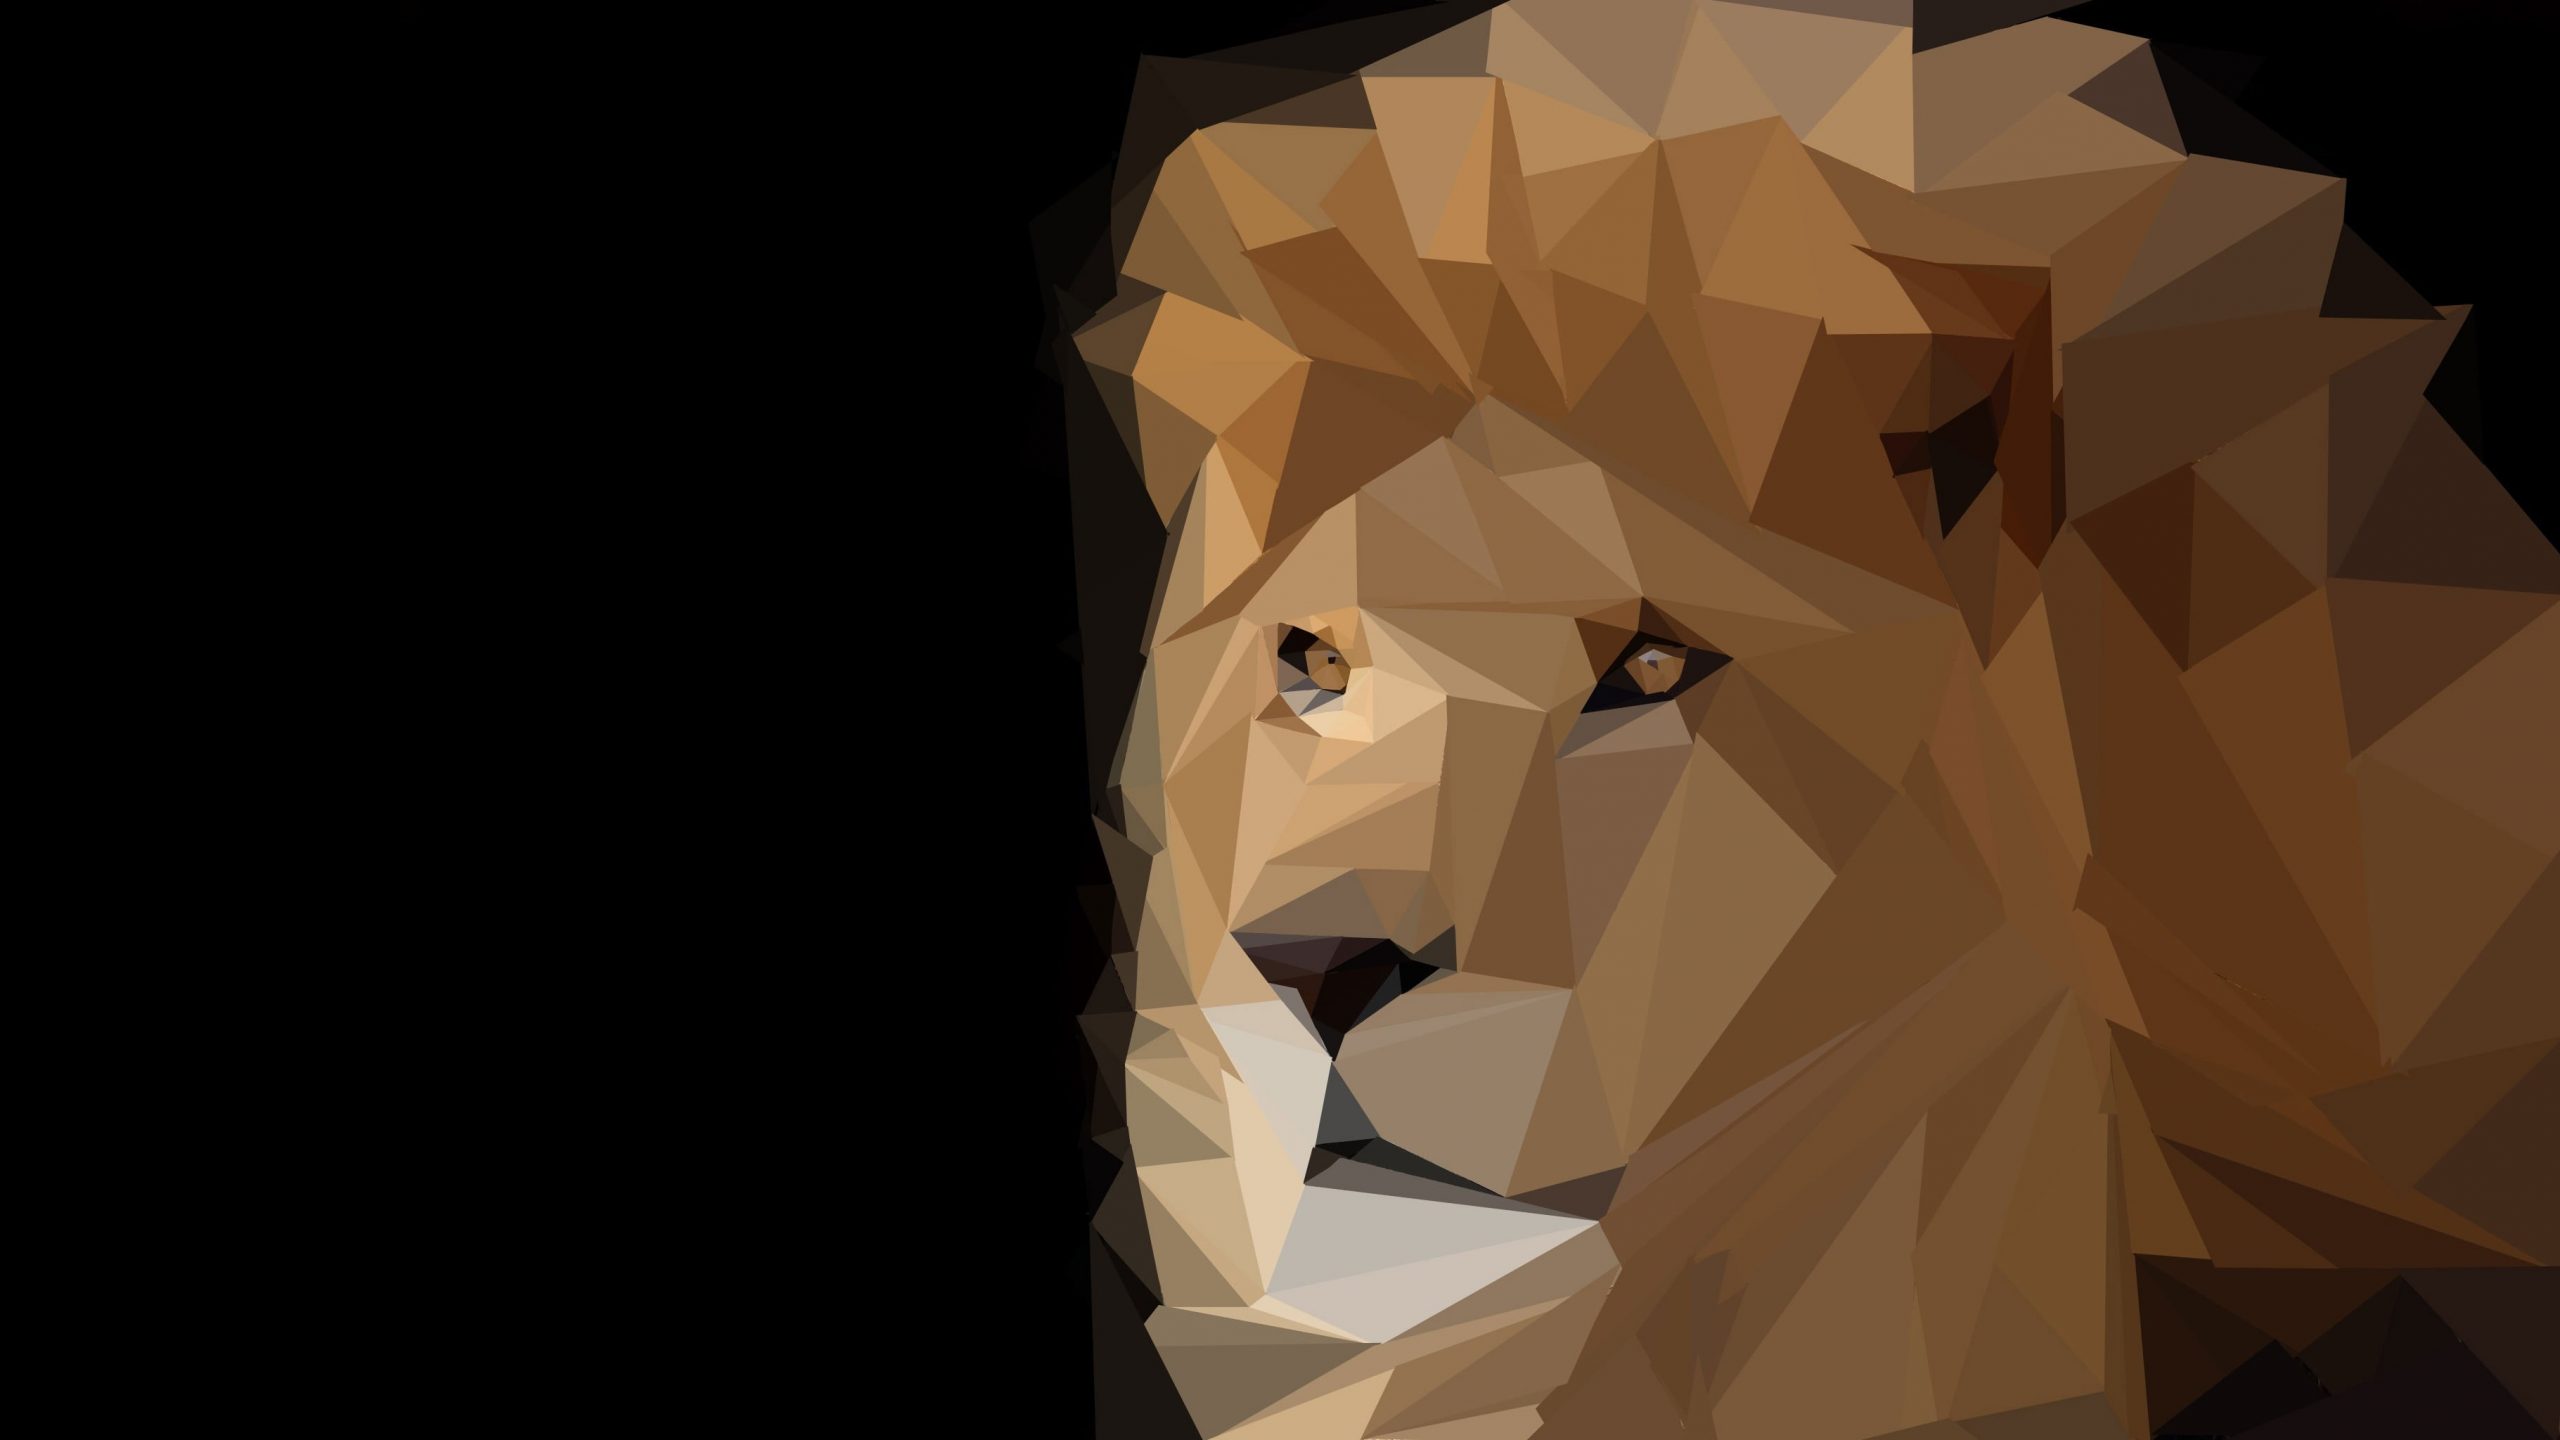 Brown Lion Illustration Wallpaper, Animals, Low Poly, Digital Art, Artwork  - Wallpaperforu